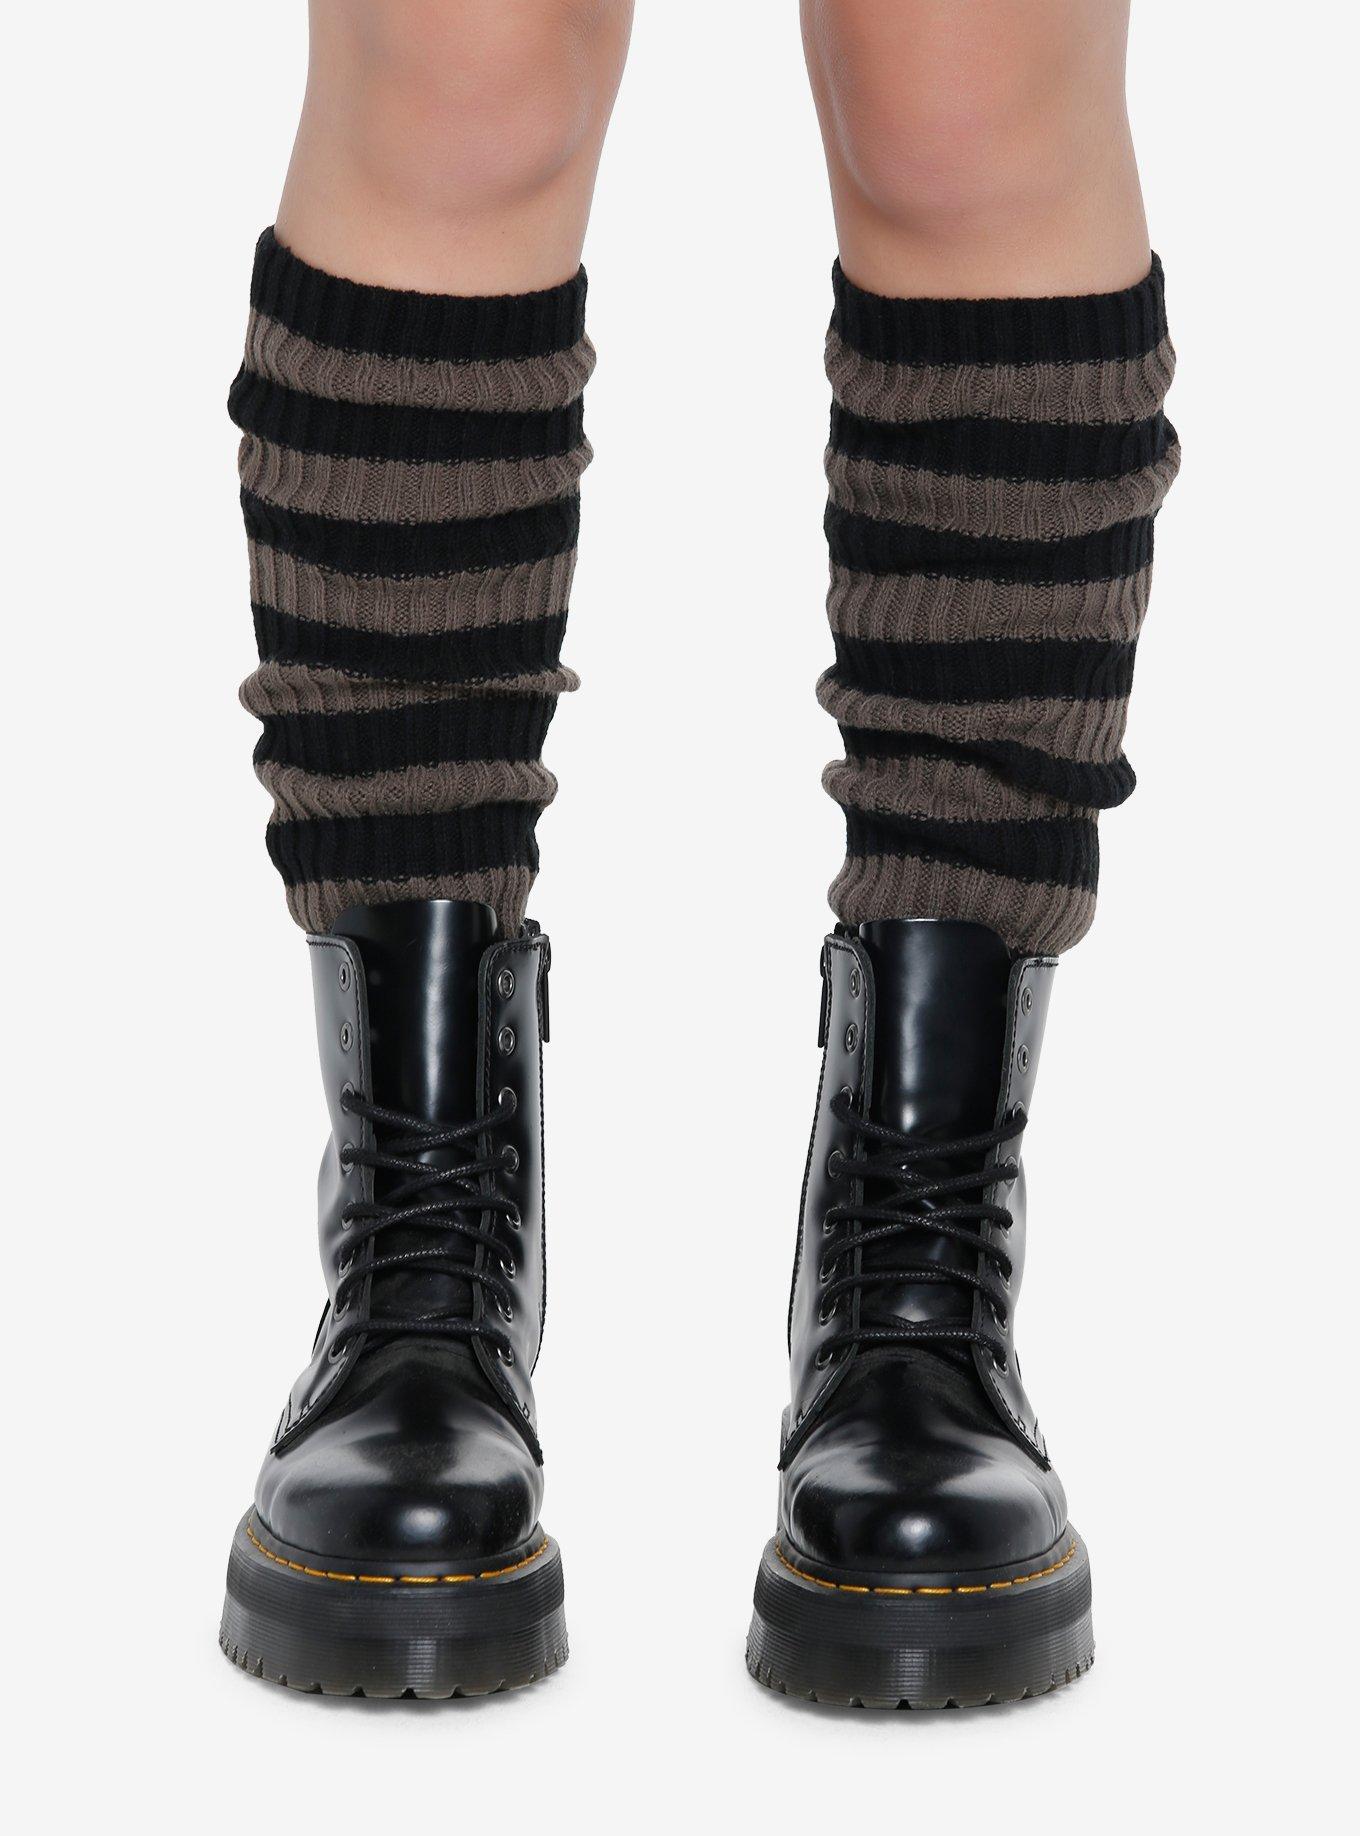 Knee High Toe Socks Black Grey High Socks Womens Long Warm Socks